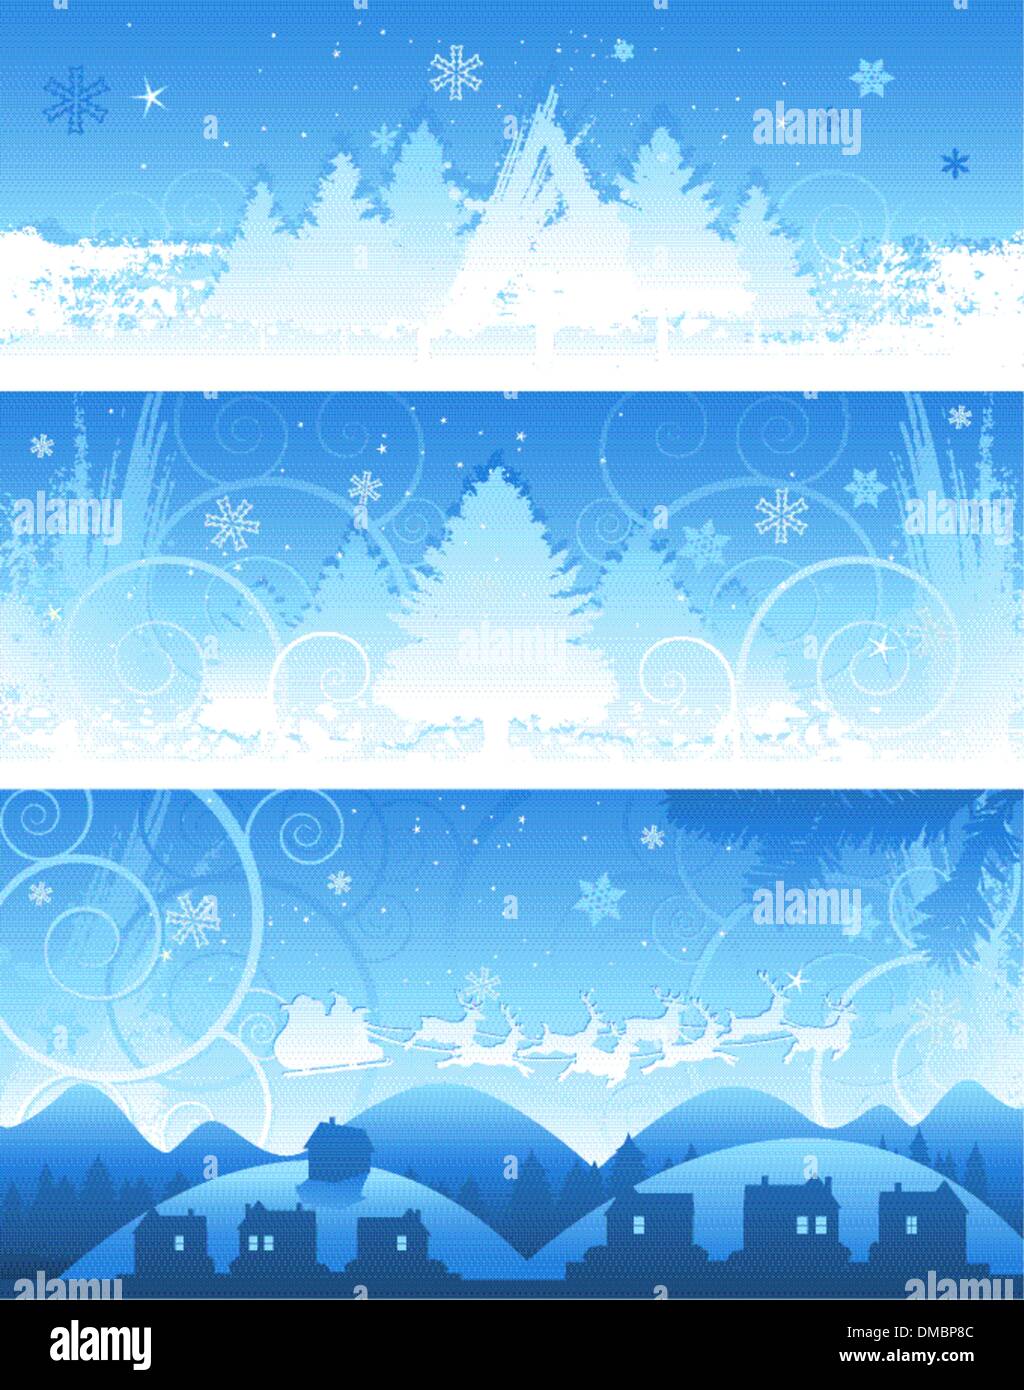 Winter Christmas background Stock Vector